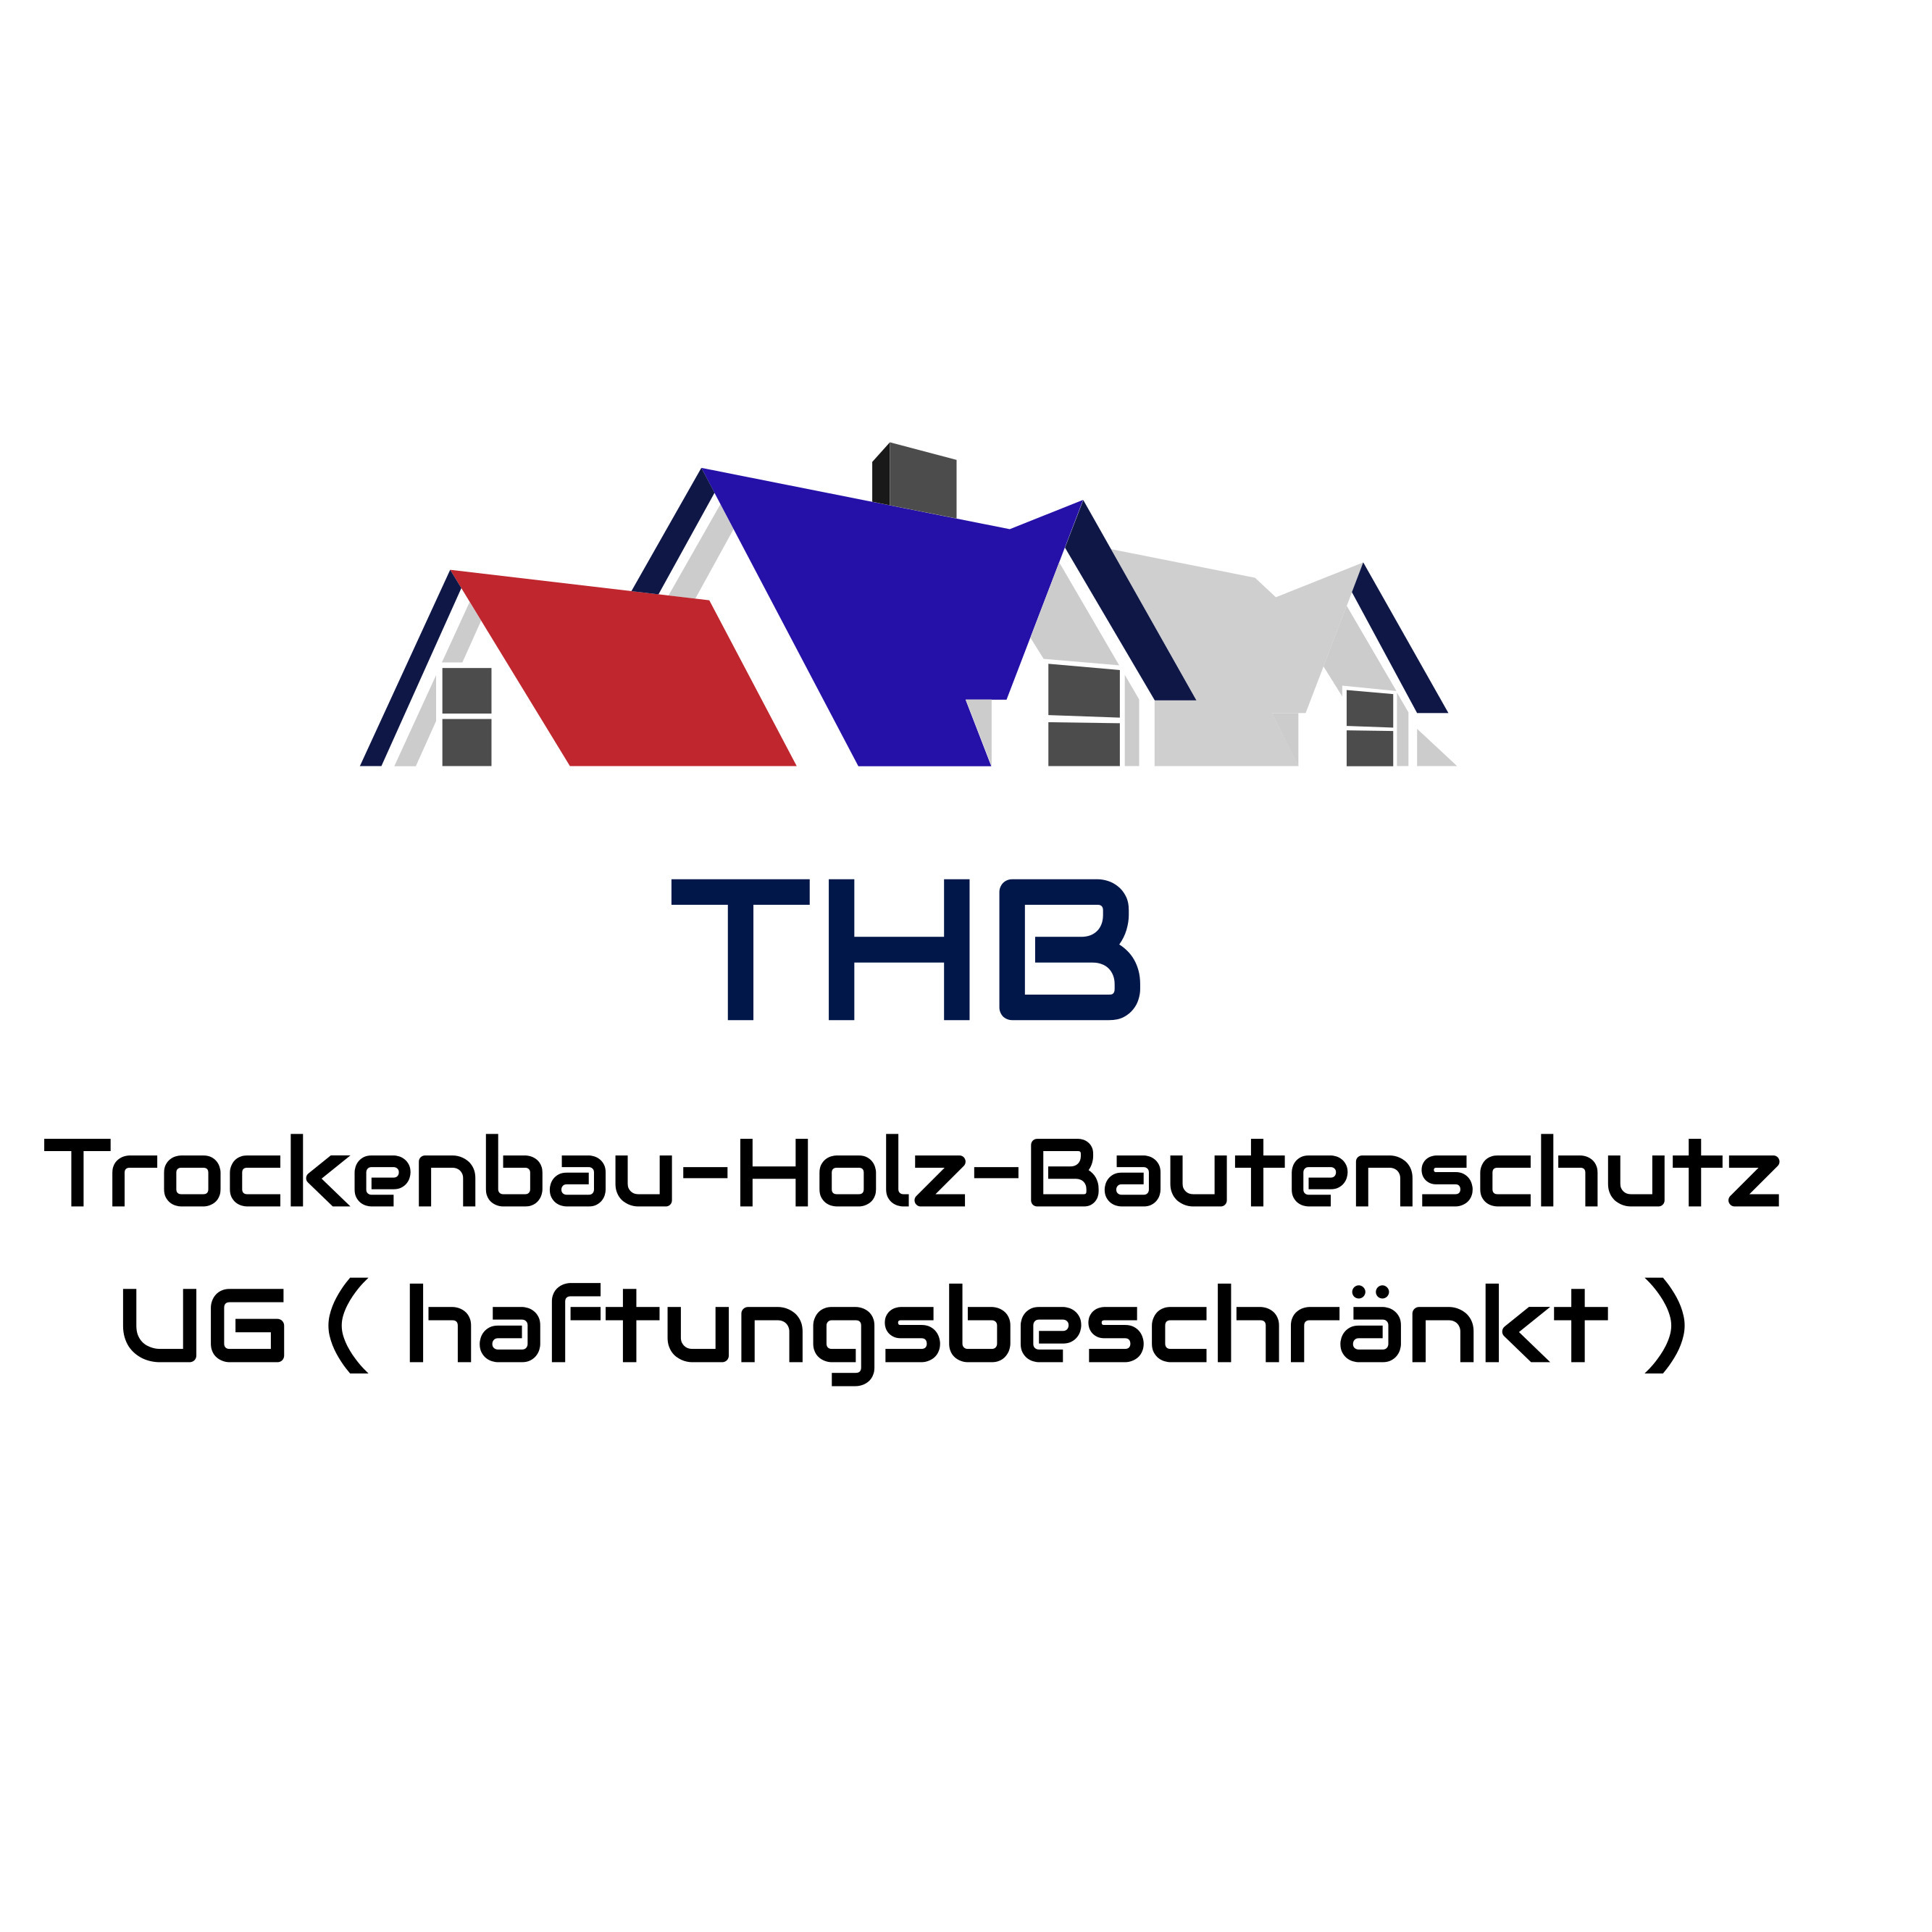 THB Trockenbau - Holz - Bautenschutz UG Logo